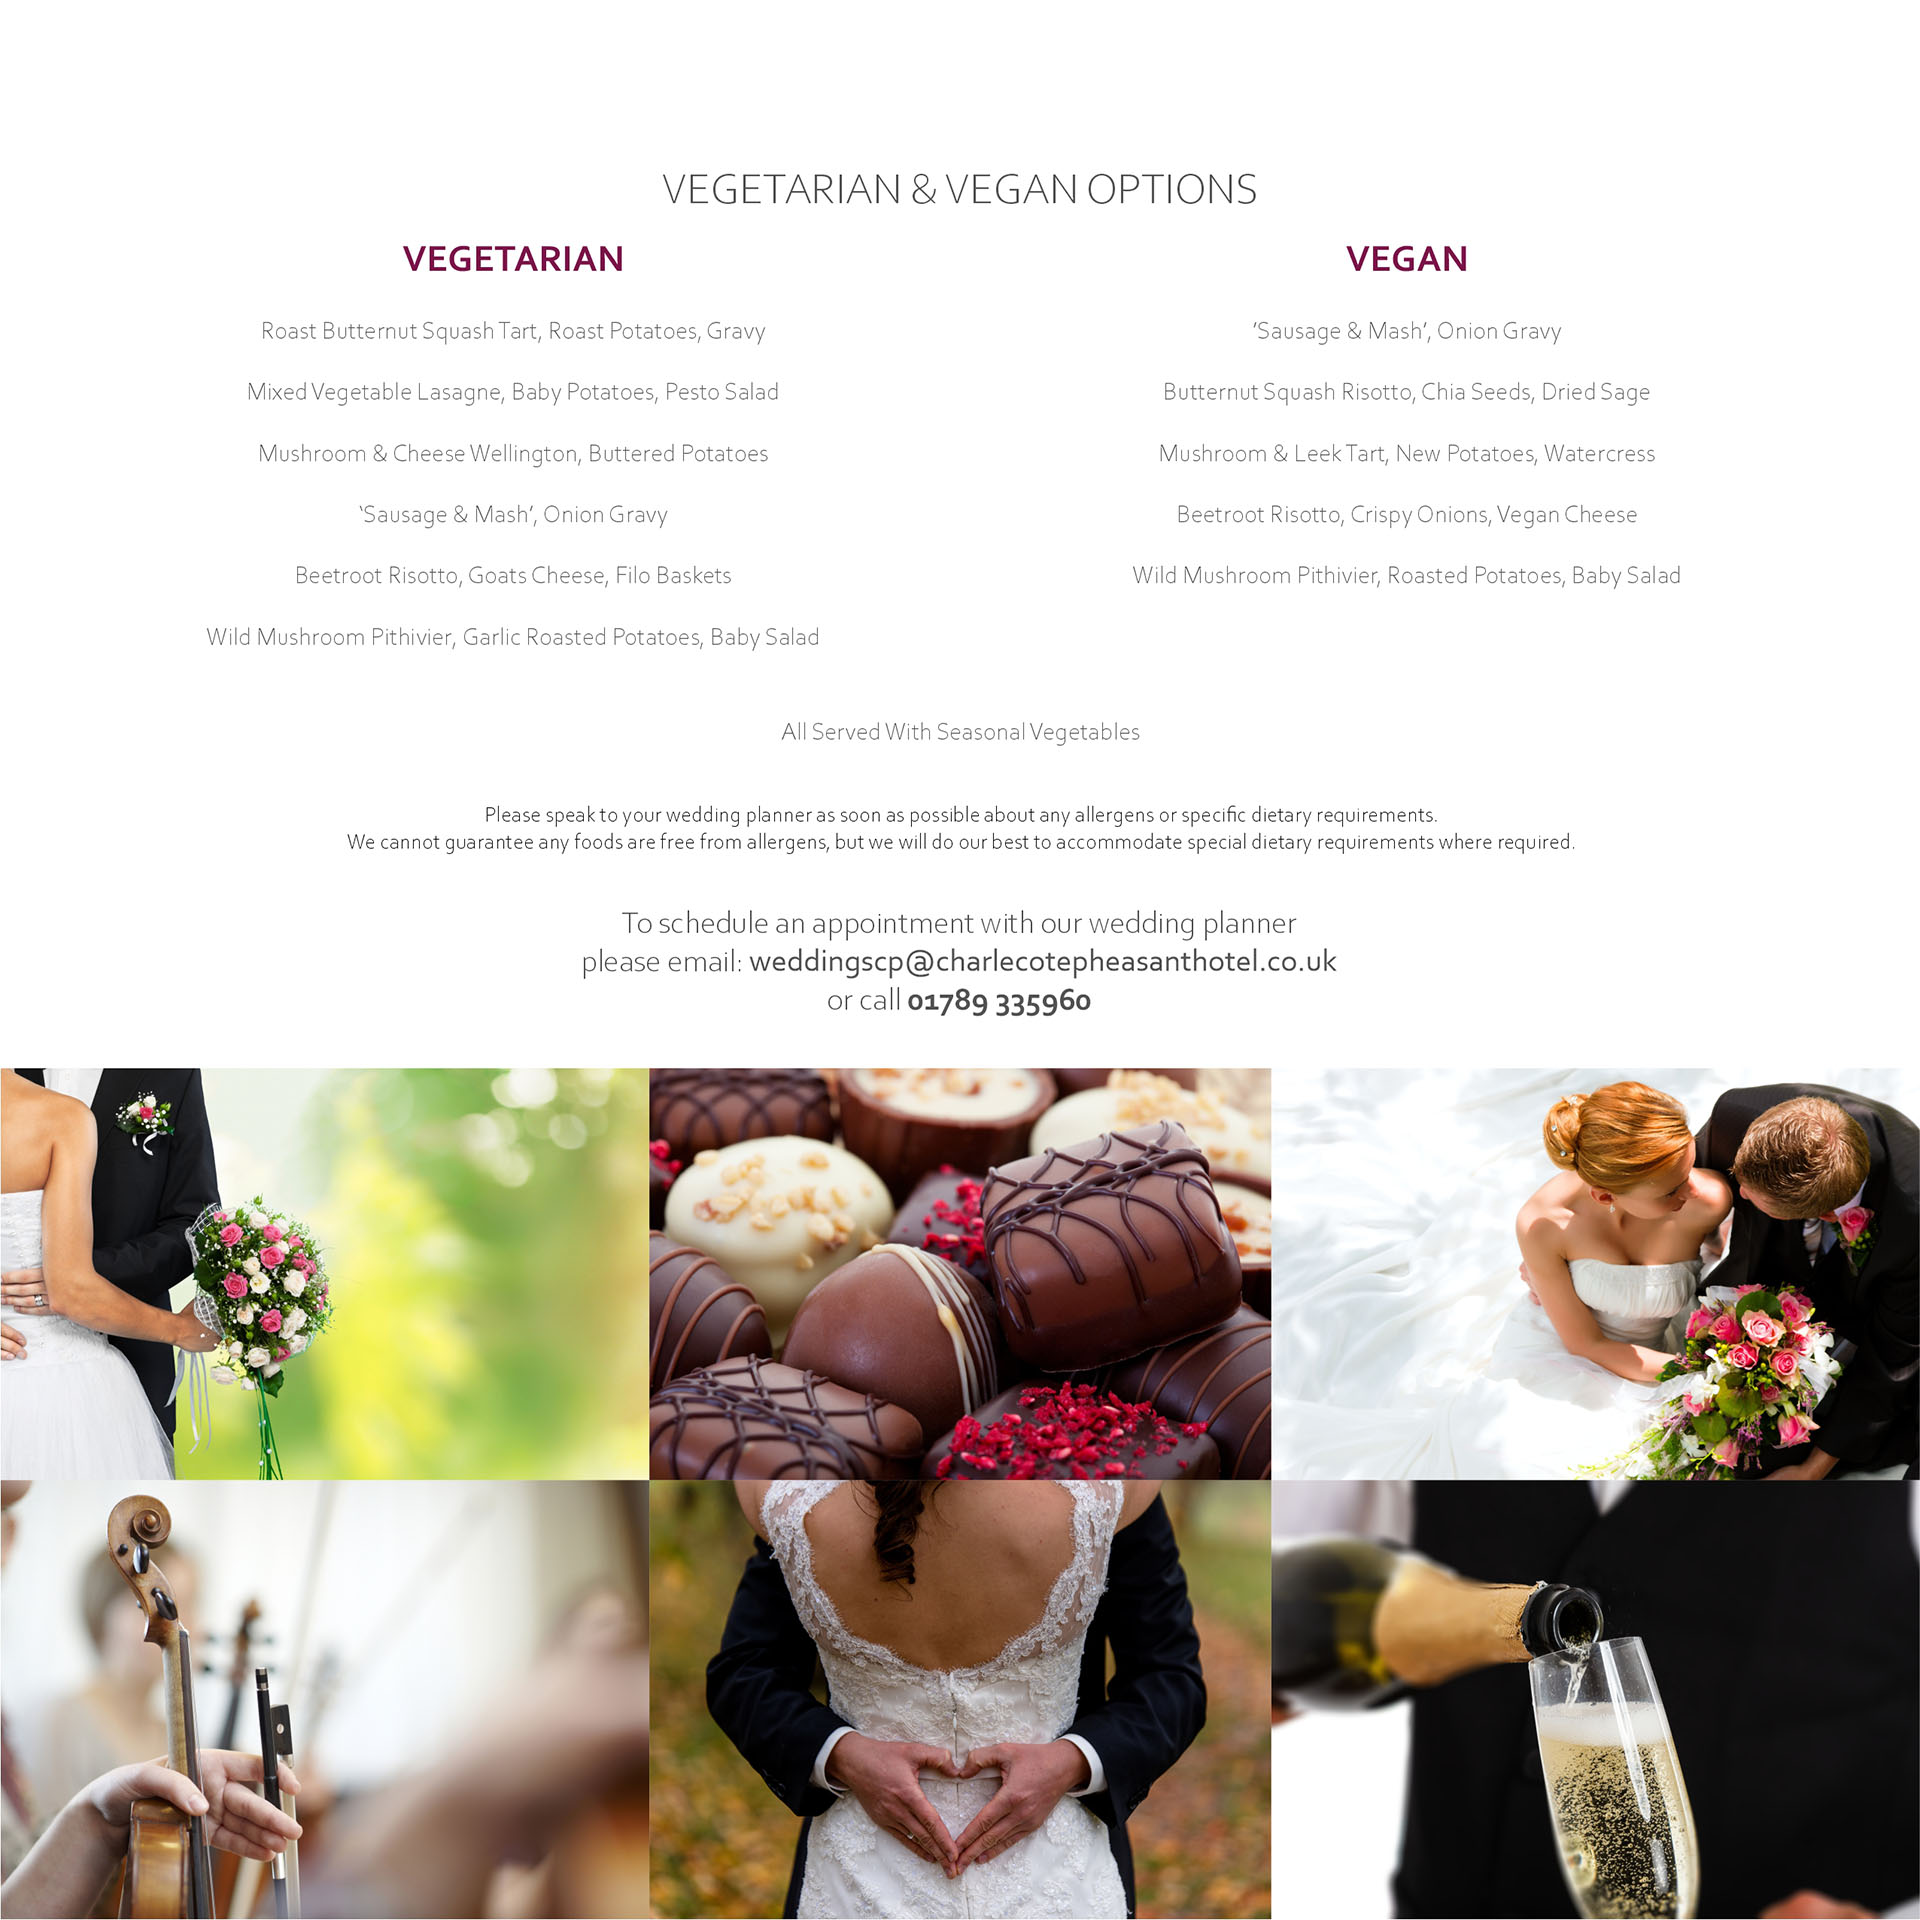 The Charlecote Pheasant Hotel Wedding Brochure